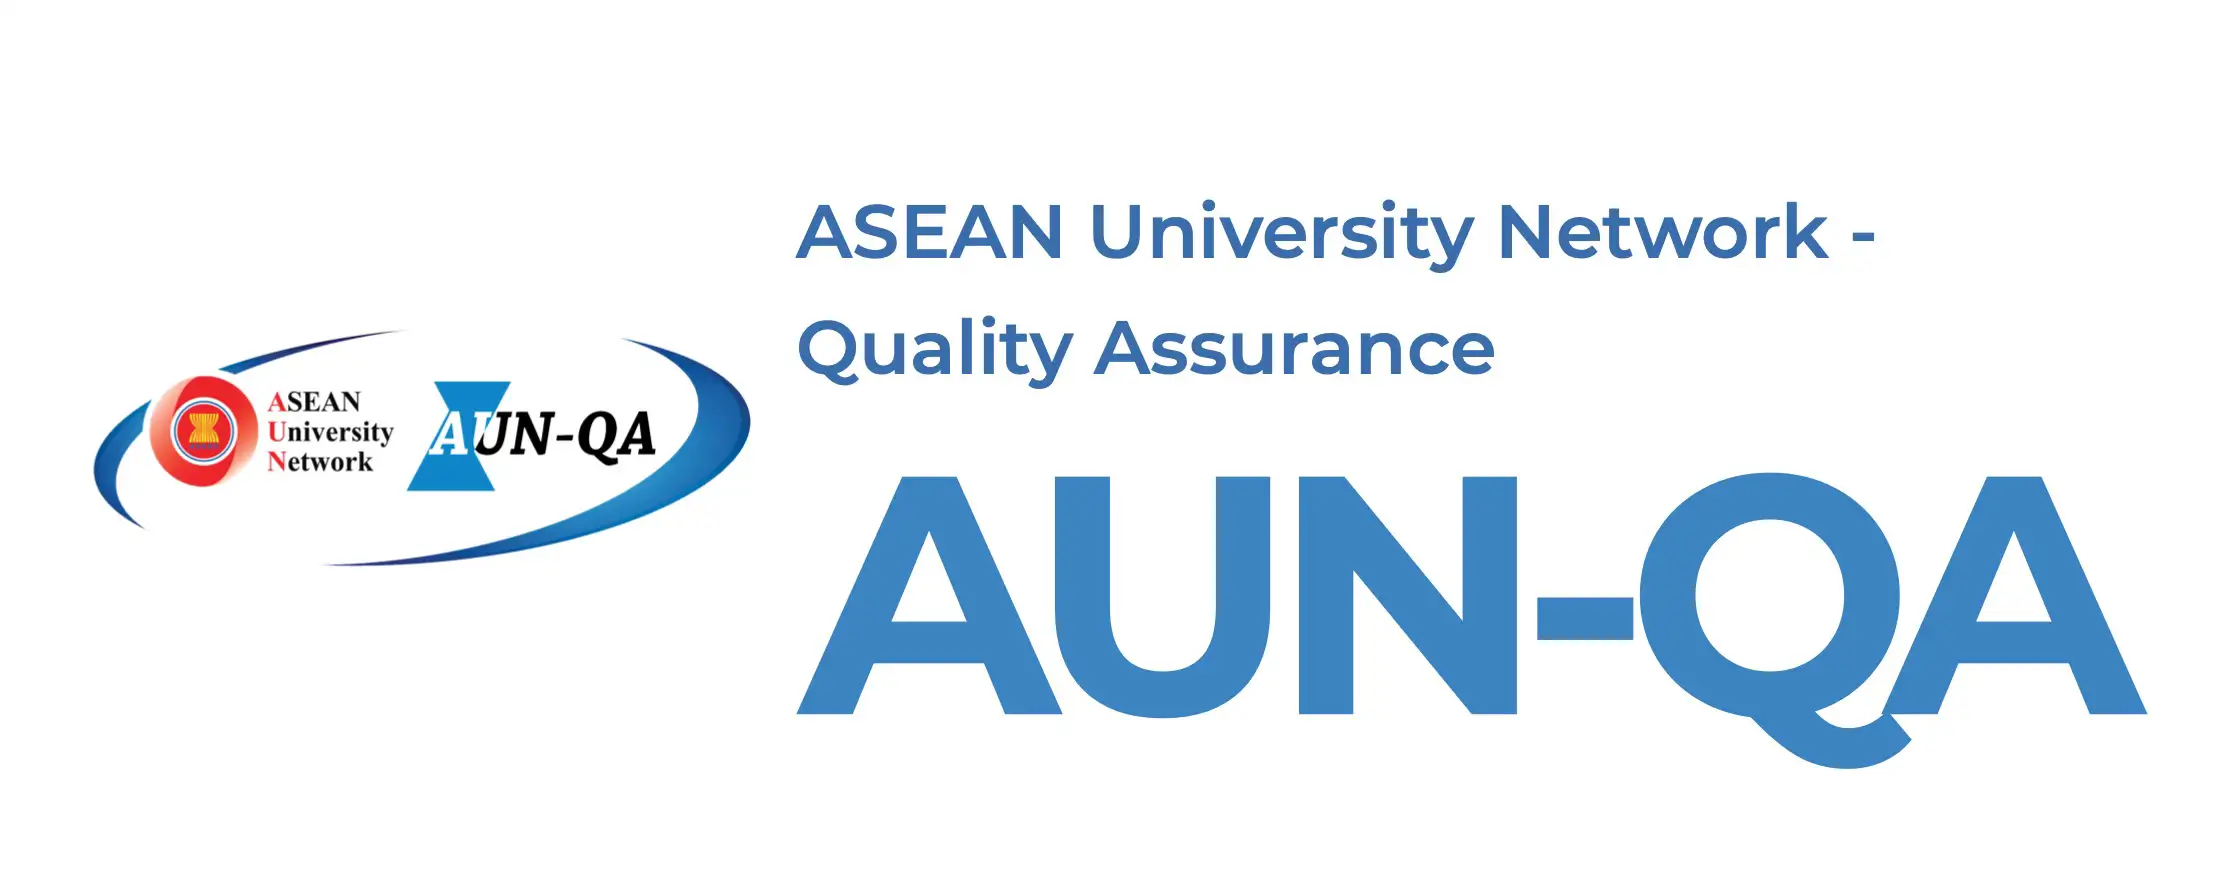 ASEAN University Network - Quality Assurance